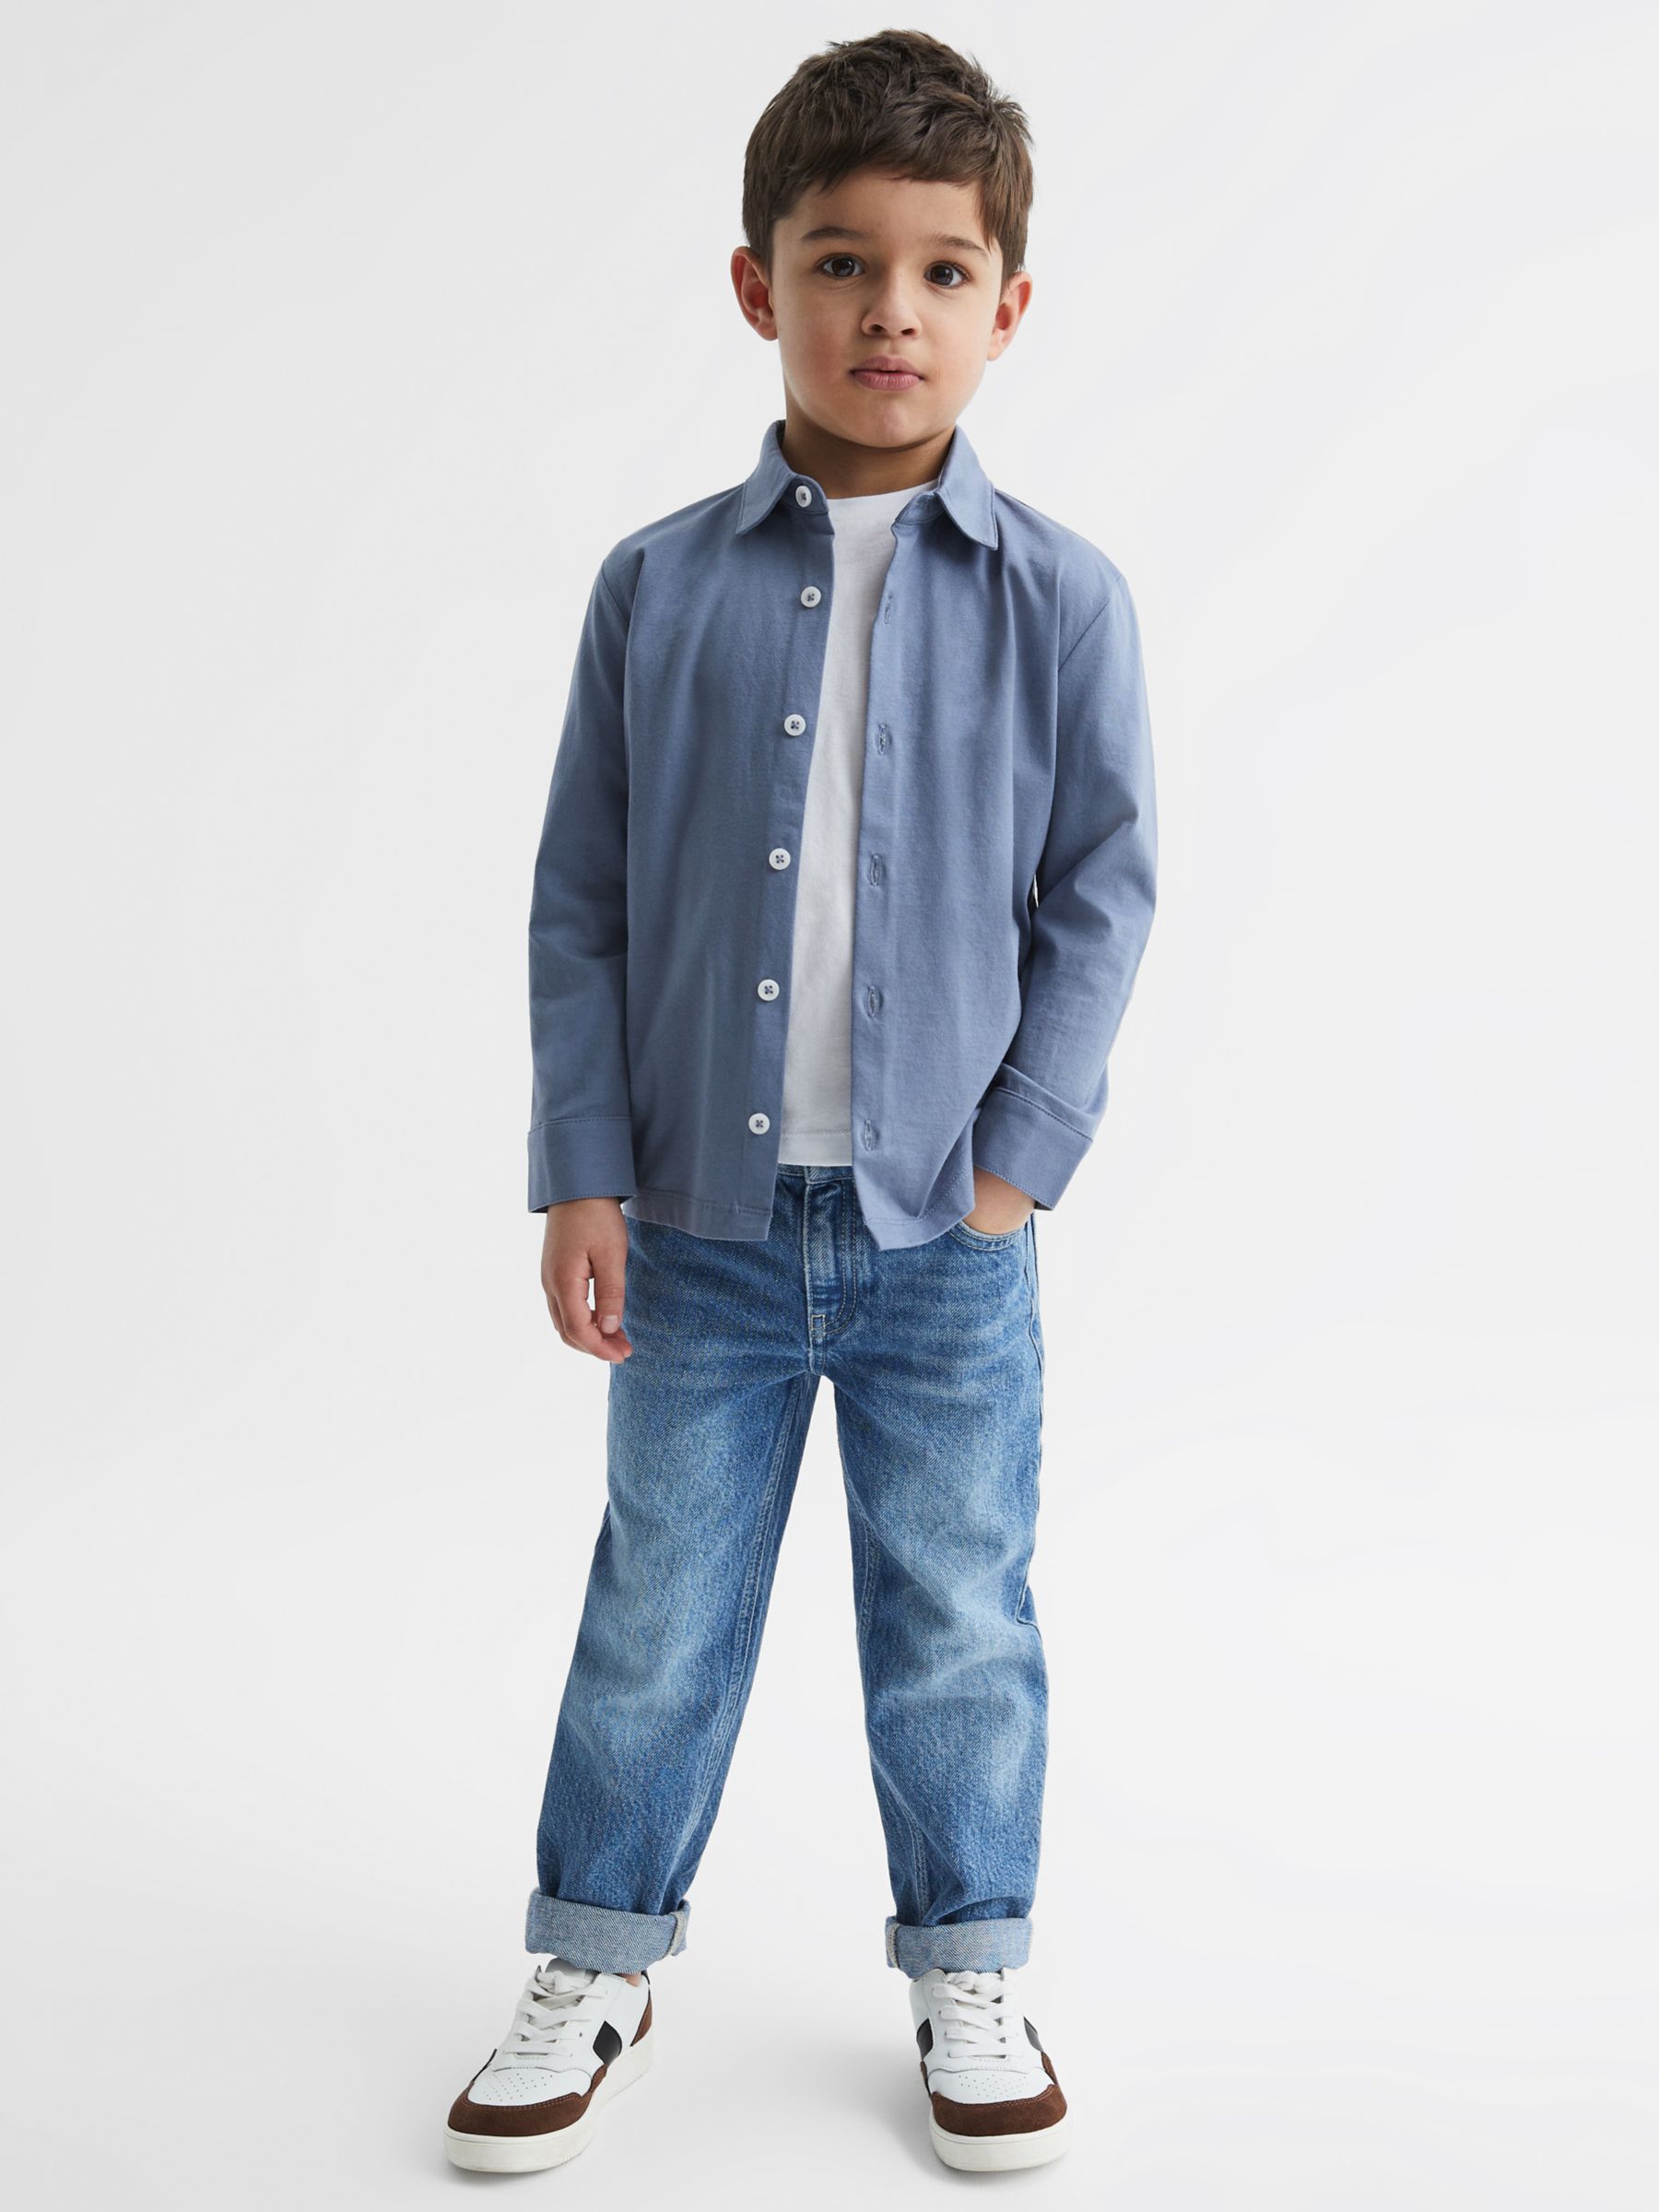 Reiss Kids' Hendon Shirt, Airforce Blue at John Lewis & Partners